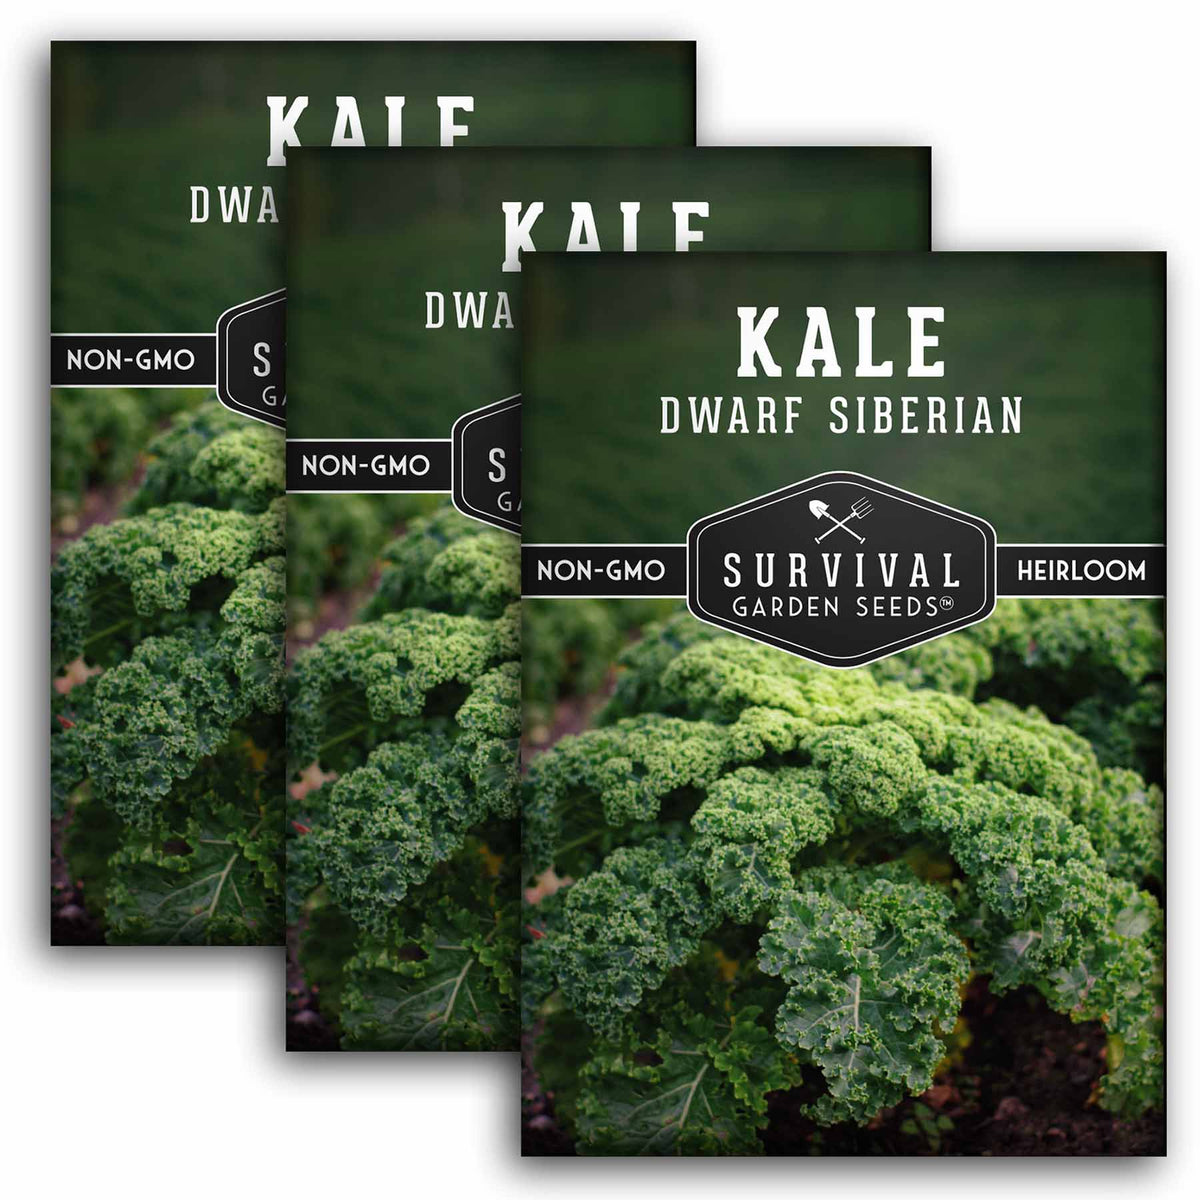 3 packets of Dwarf Siberian Kale seeds